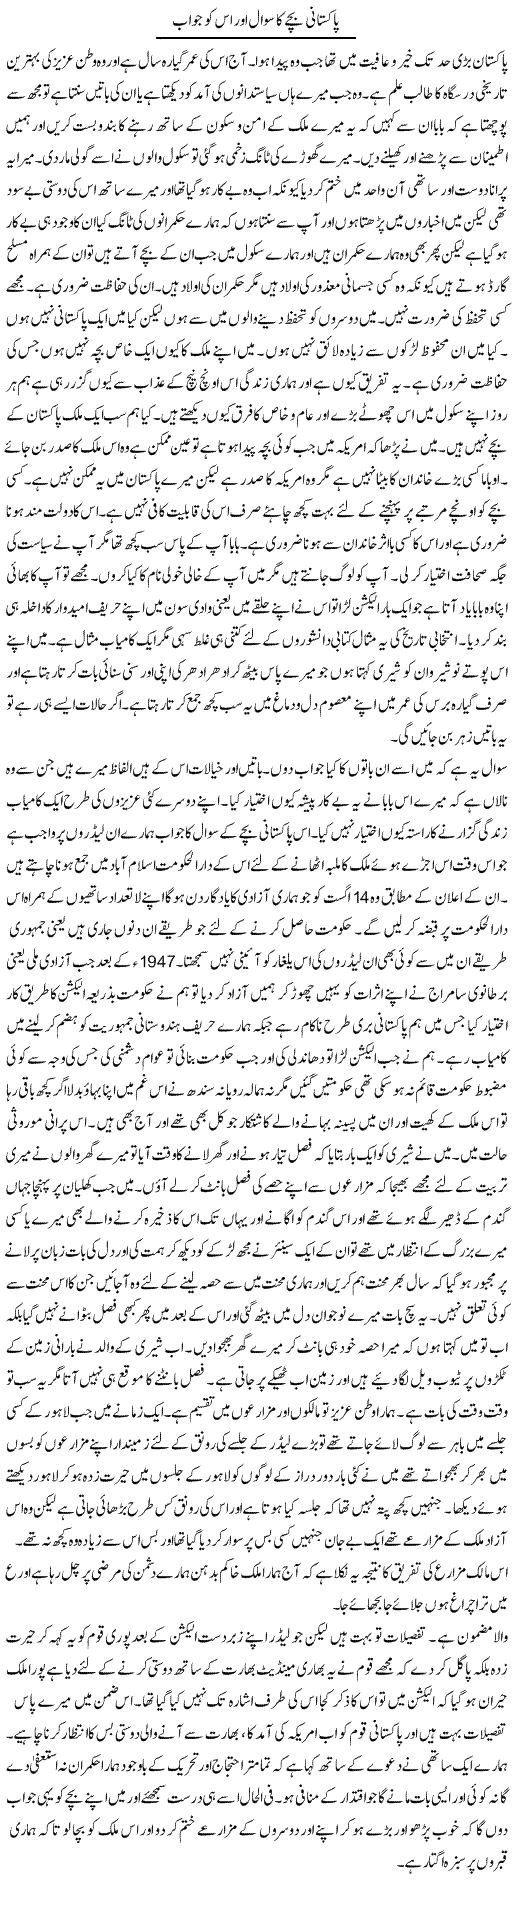 Pakistani Bchey Ka Sawal Our Us Ko Jawab | Abdul Qadir Hassan | Daily Urdu Columns